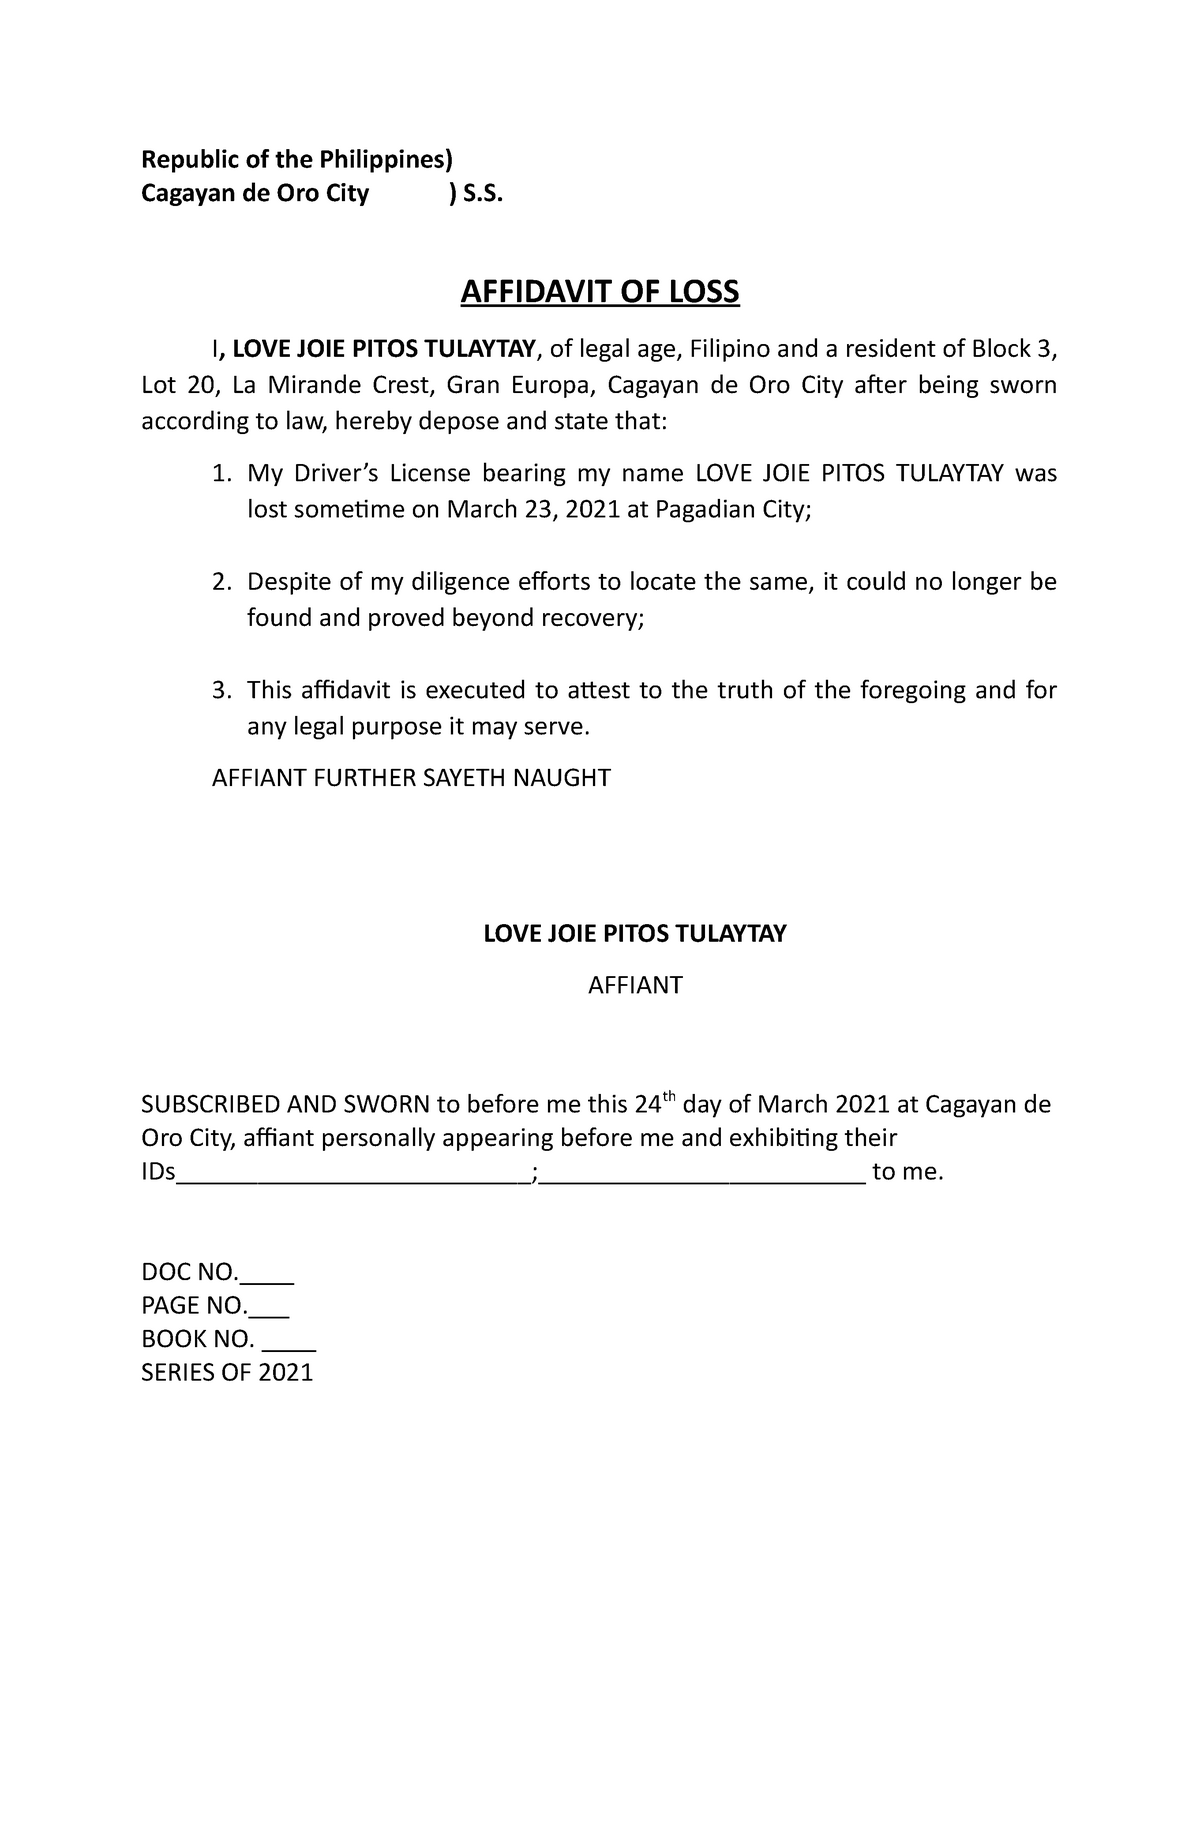 affidavit-of-loss-republic-of-the-philippines-cagayan-de-oro-city-s-affidavit-of-loss-i